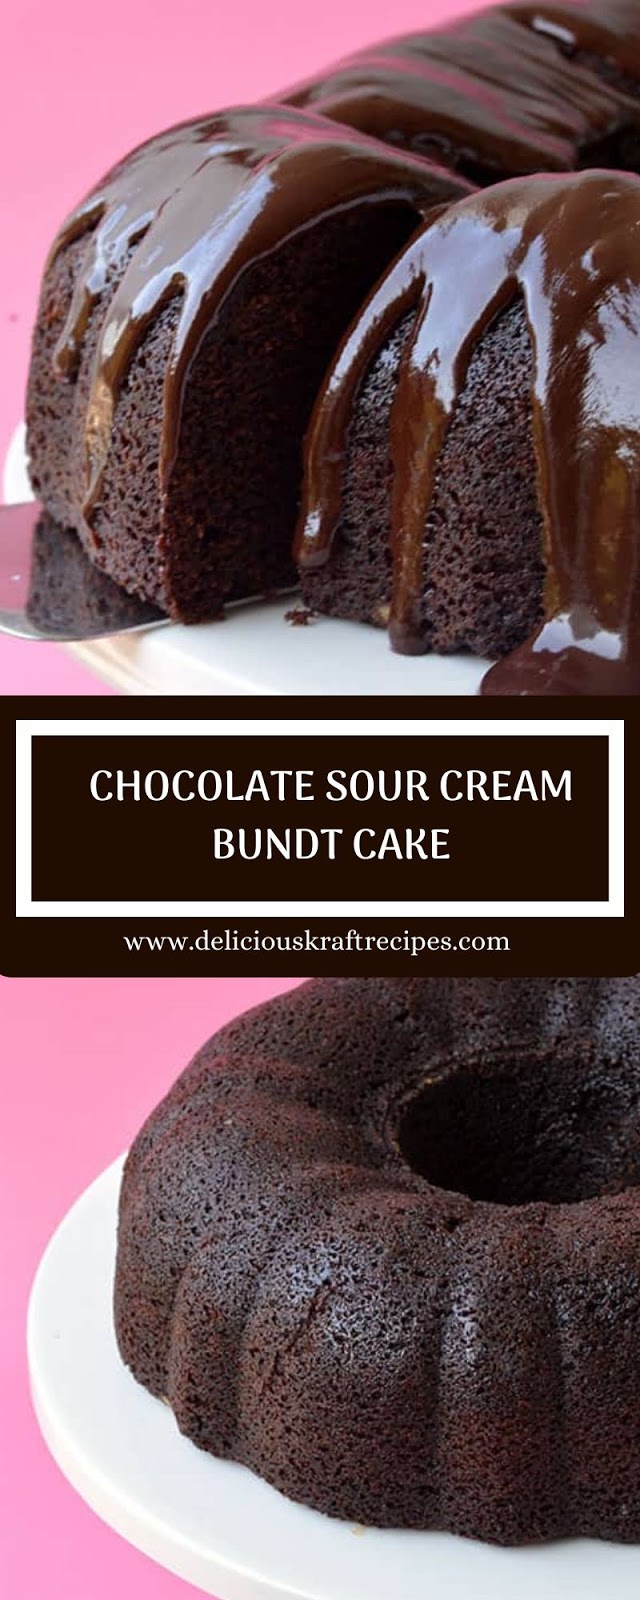 CHOCOLATE SOUR CREAM BUNDT CAKE